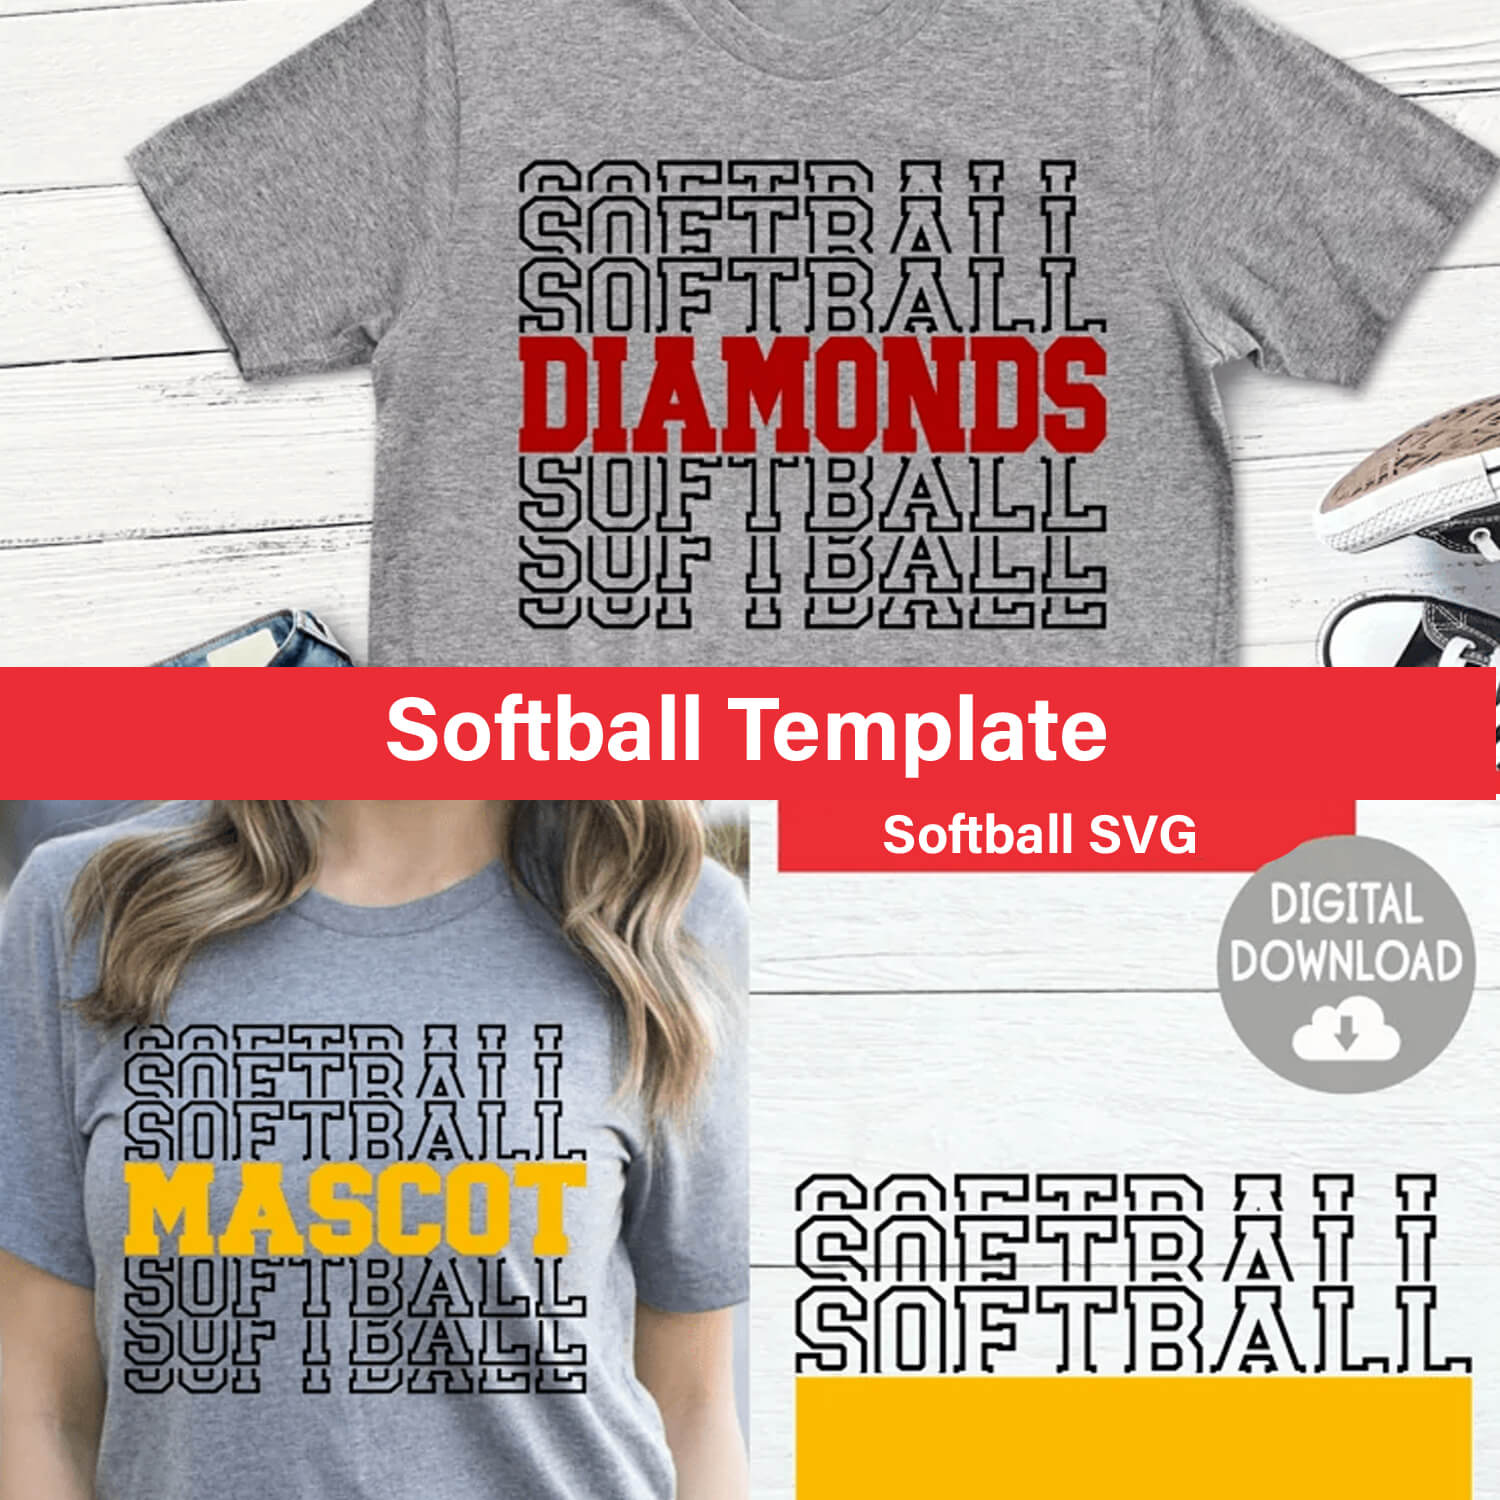 Examples of using Softball SVG.